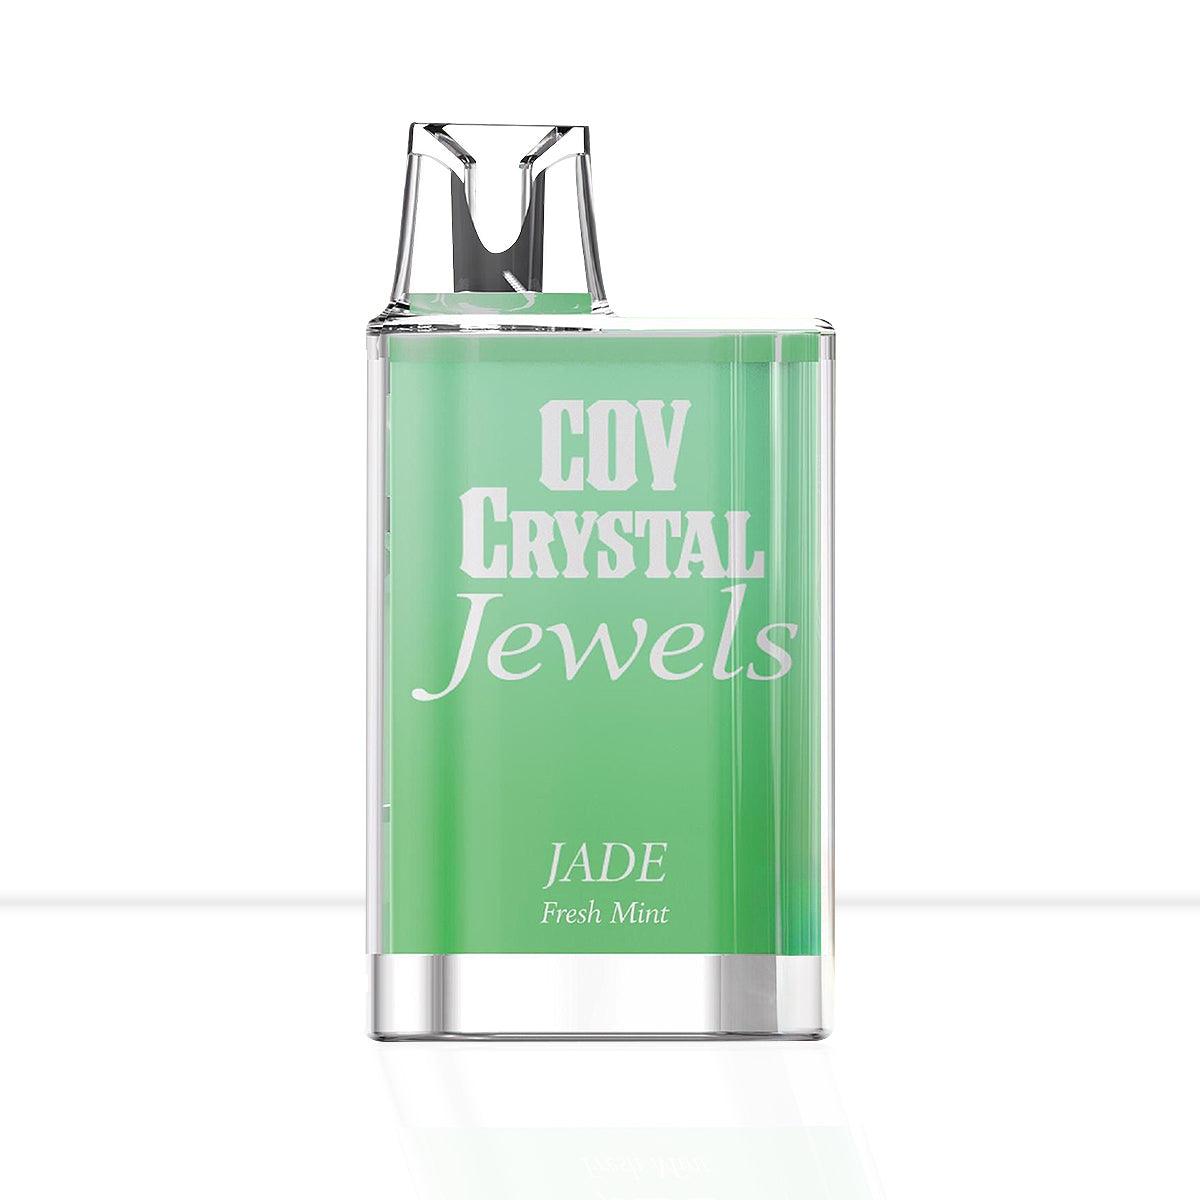 COV Crystal Jewels Fresh Mint Jade Disposable - Vape Kits